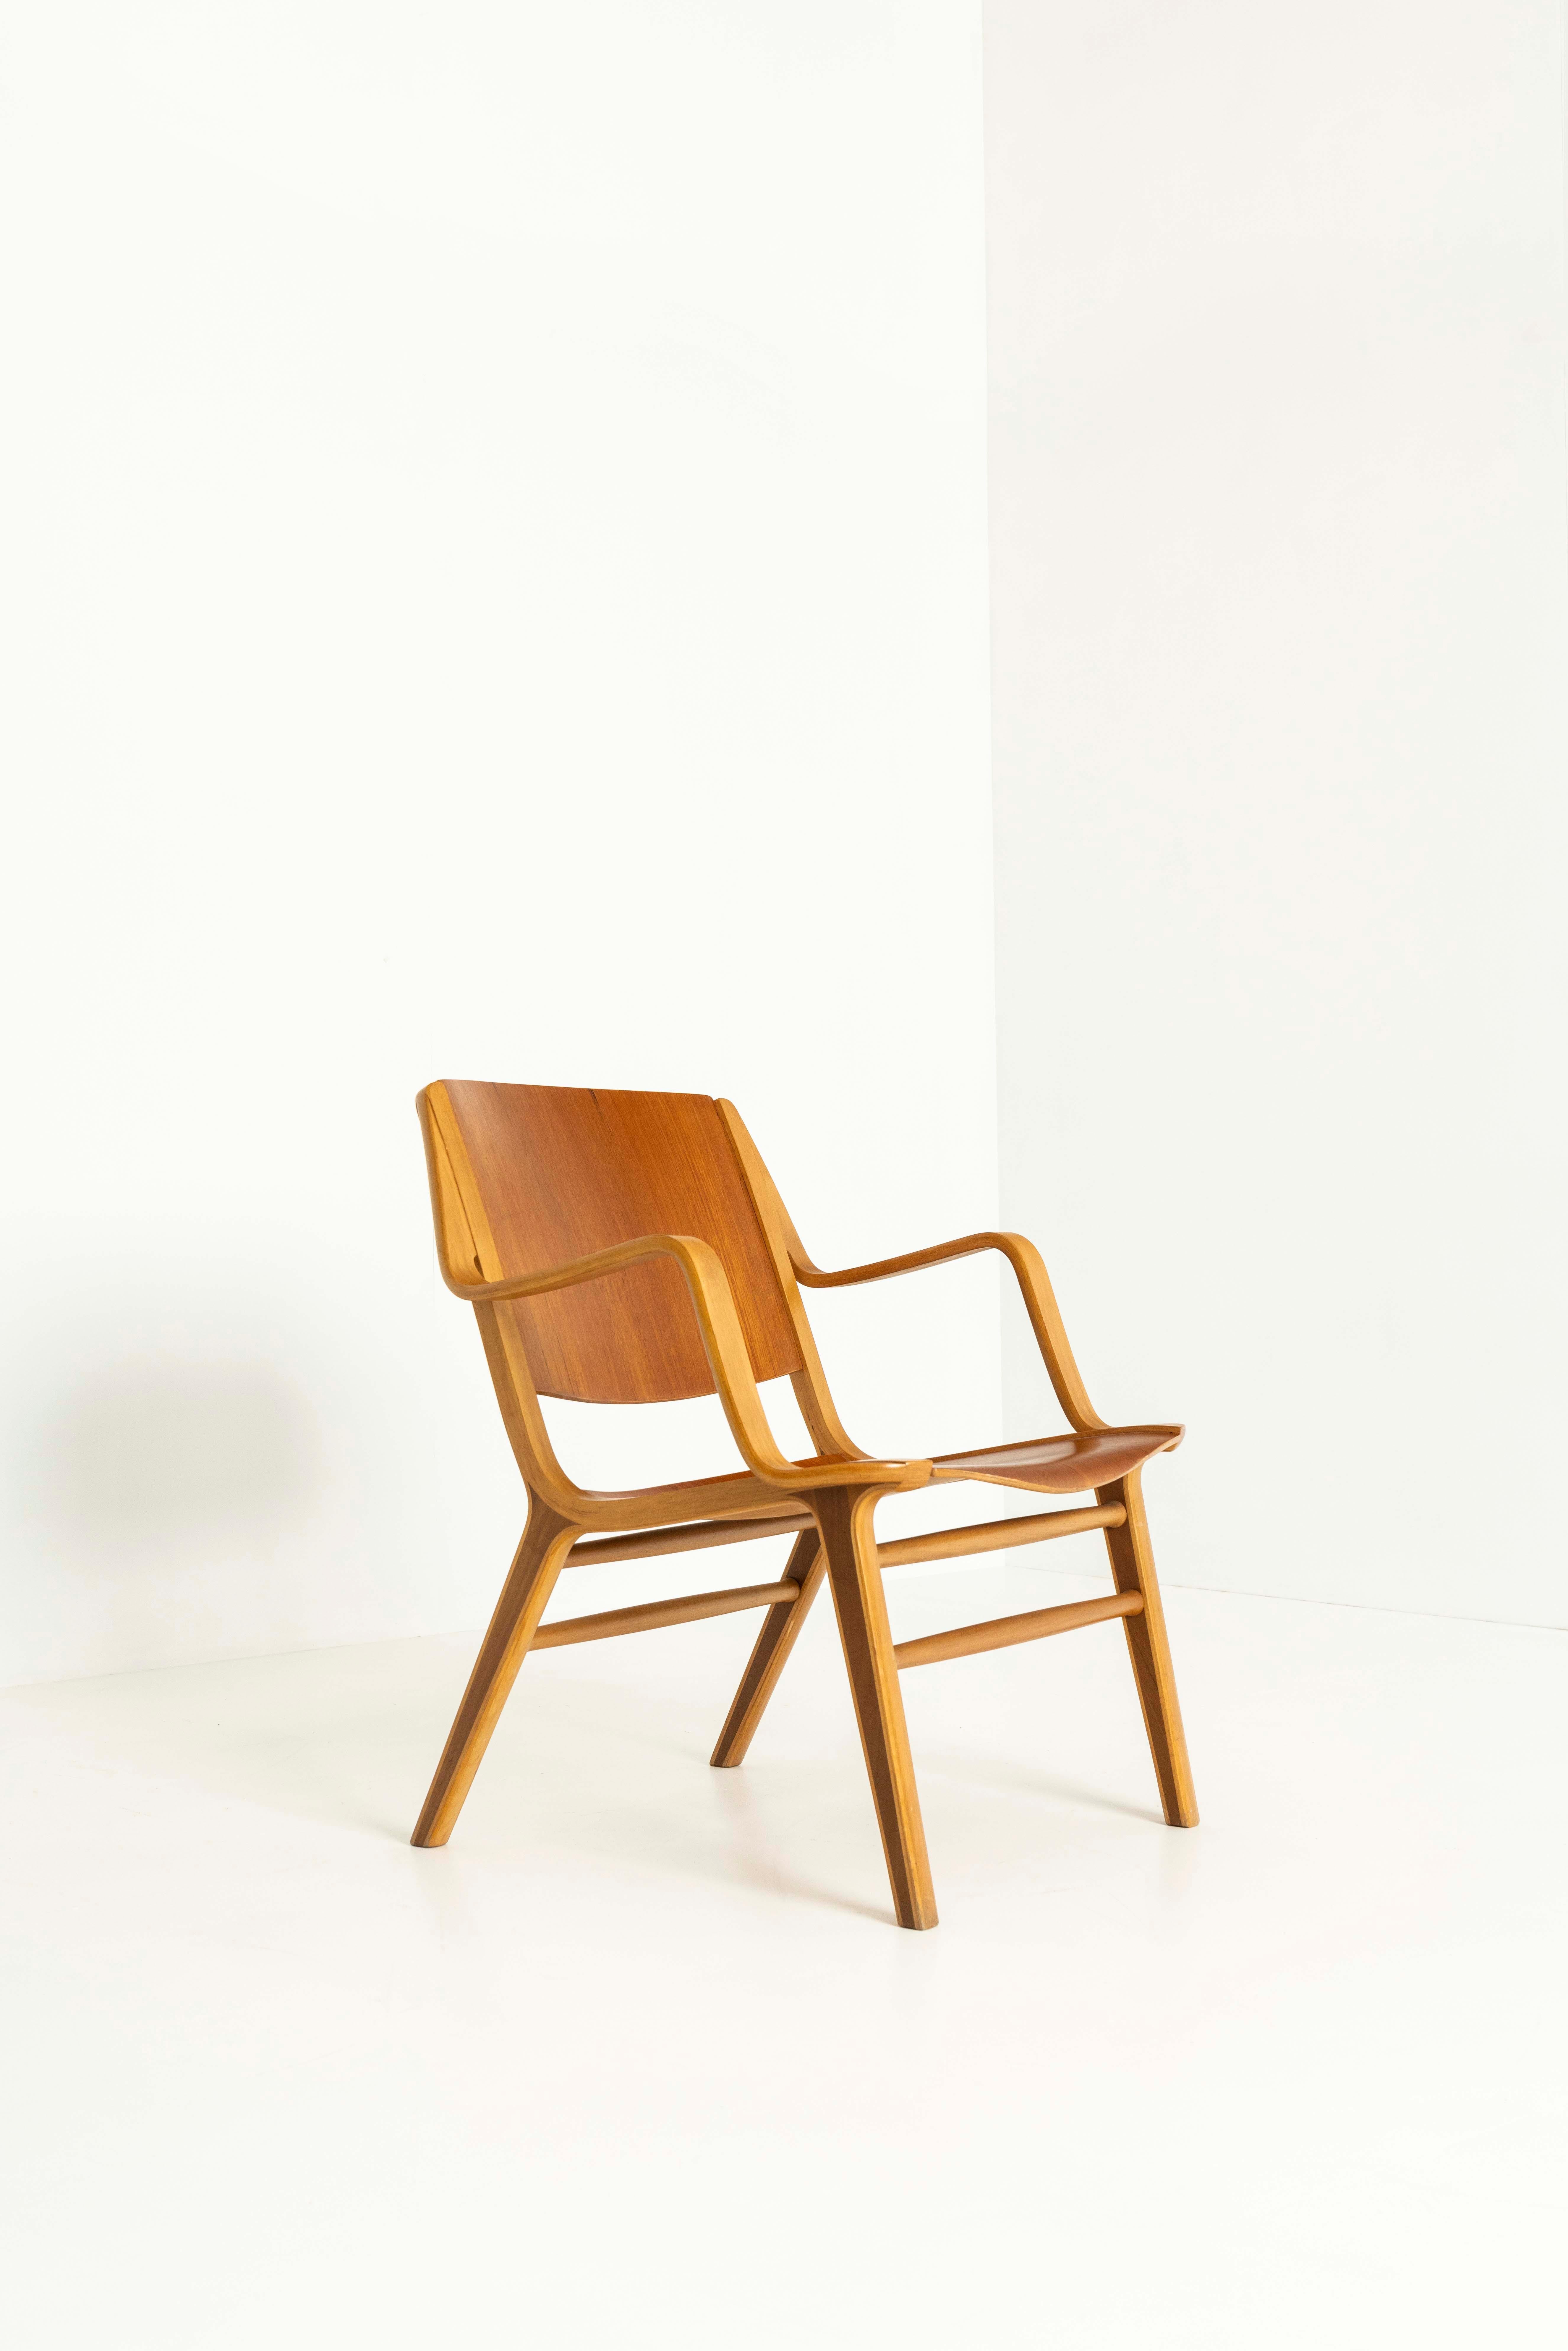 Danish 'Ax Chair' by Peter Hvidt & Orla Mølgaard Nielsen from the 1950s, Denmark